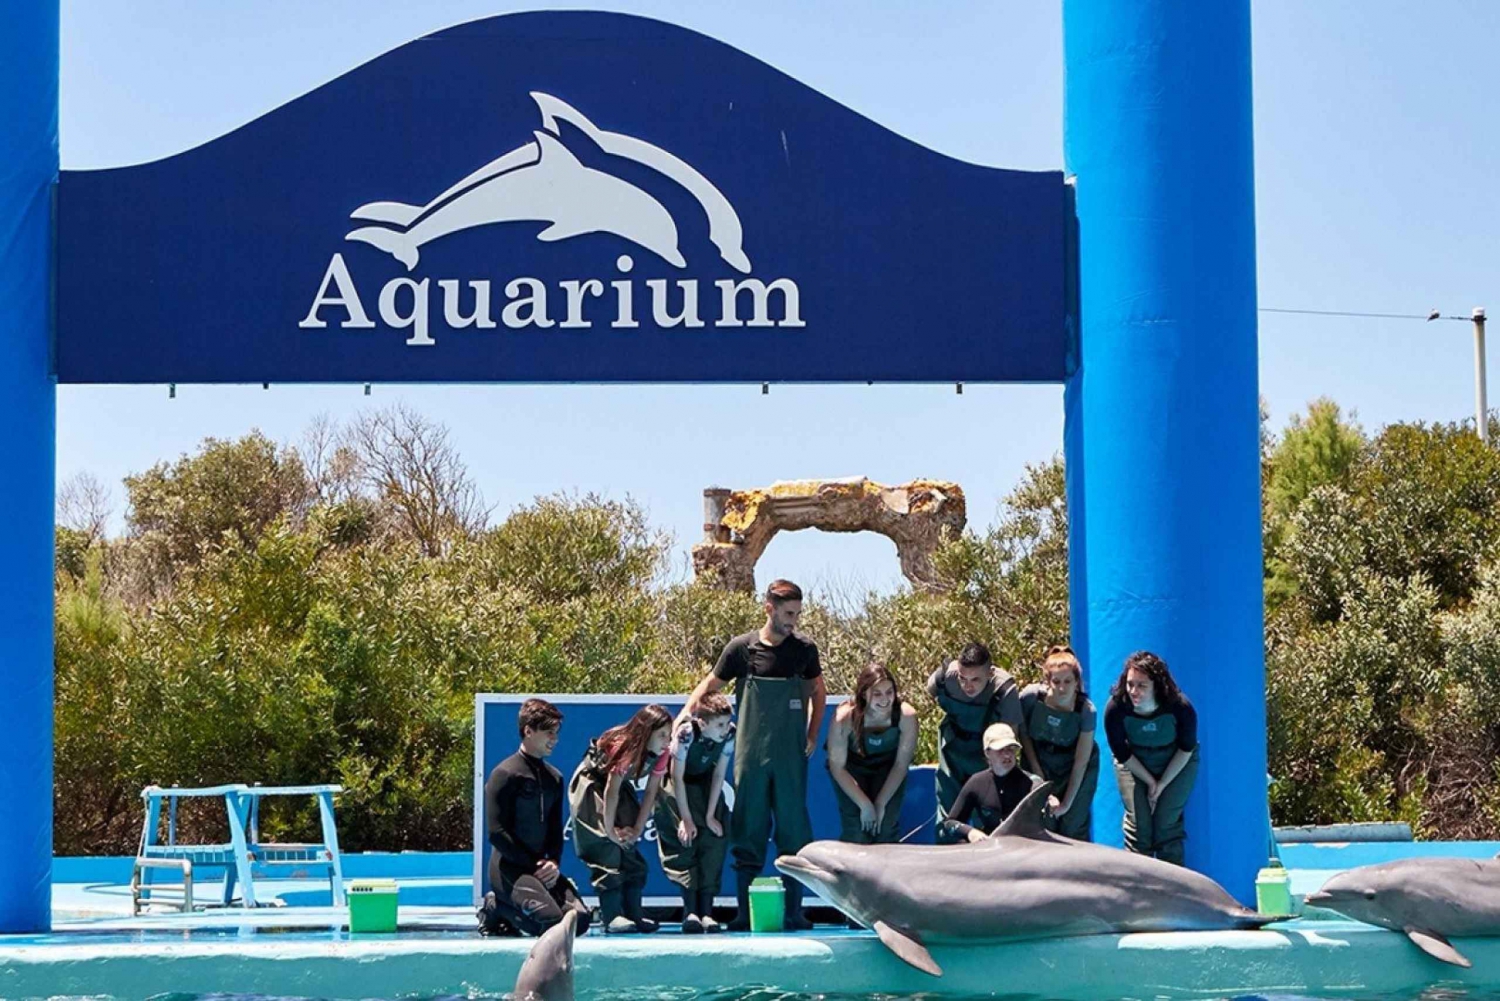 Cancun: Ticket for the Interactive Aquarium